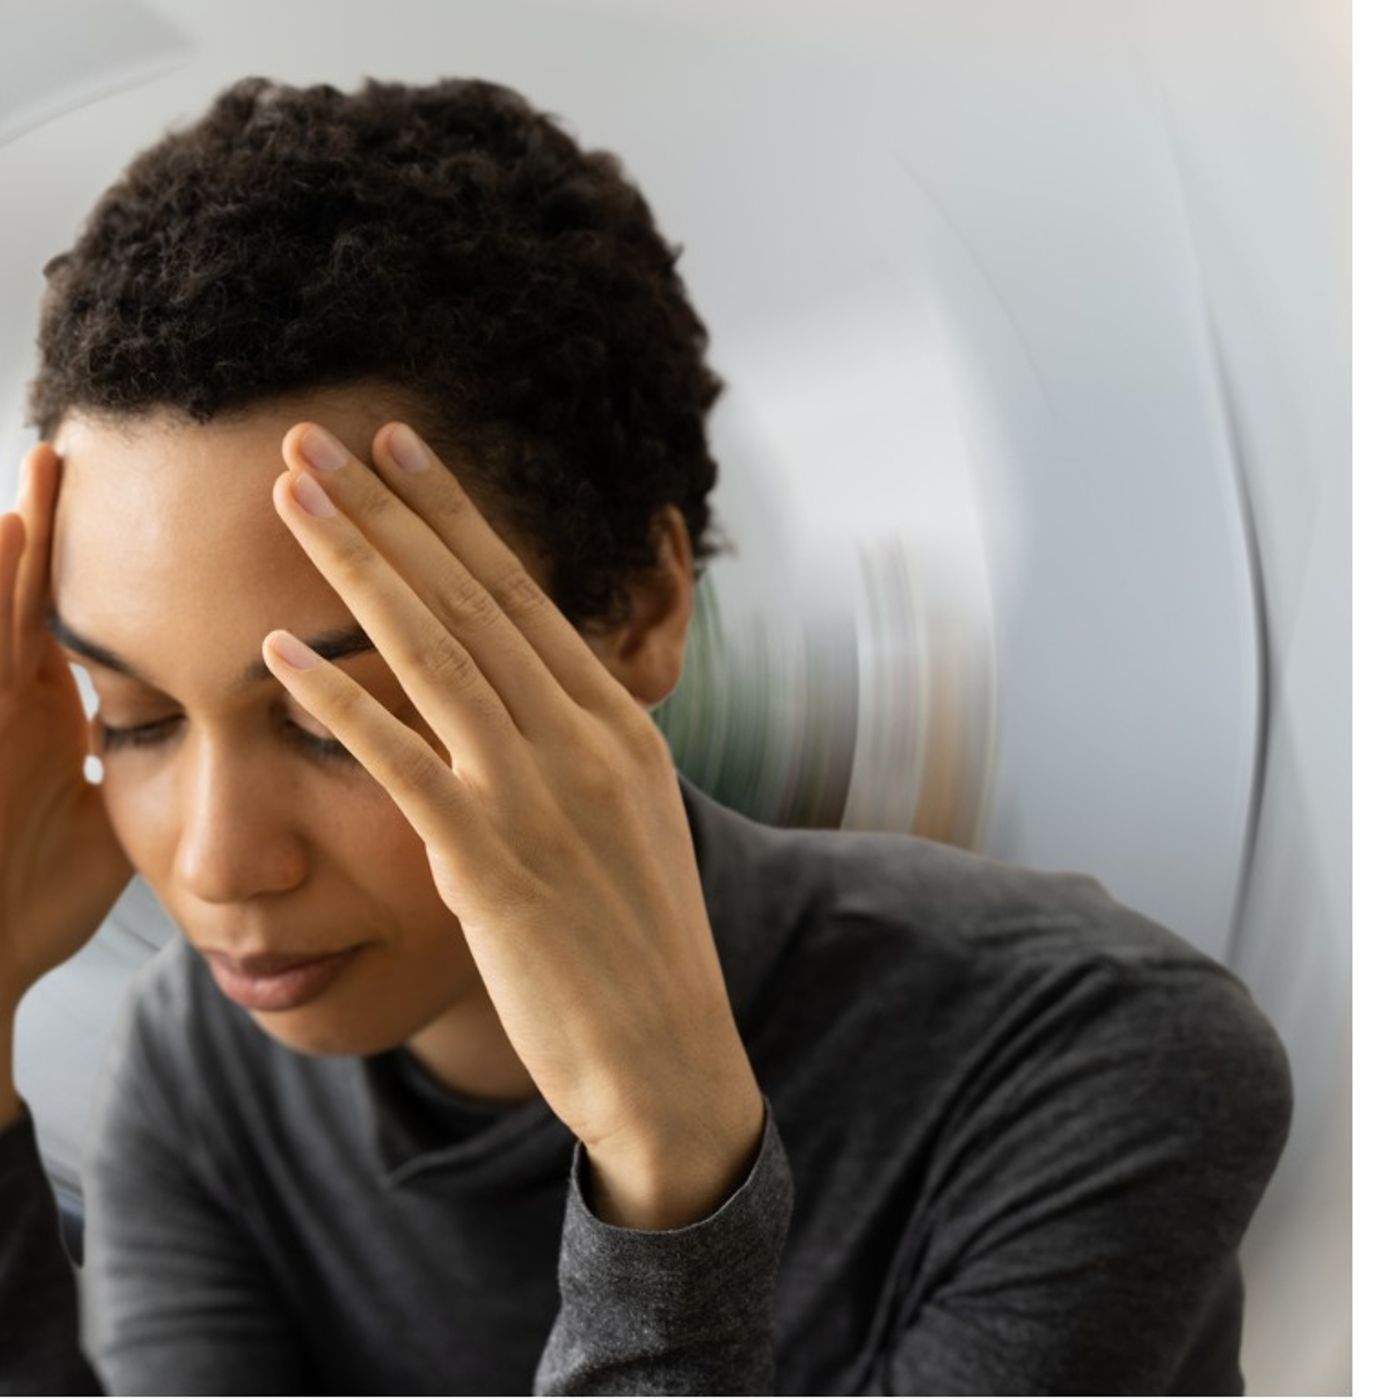 Women's health and migraine